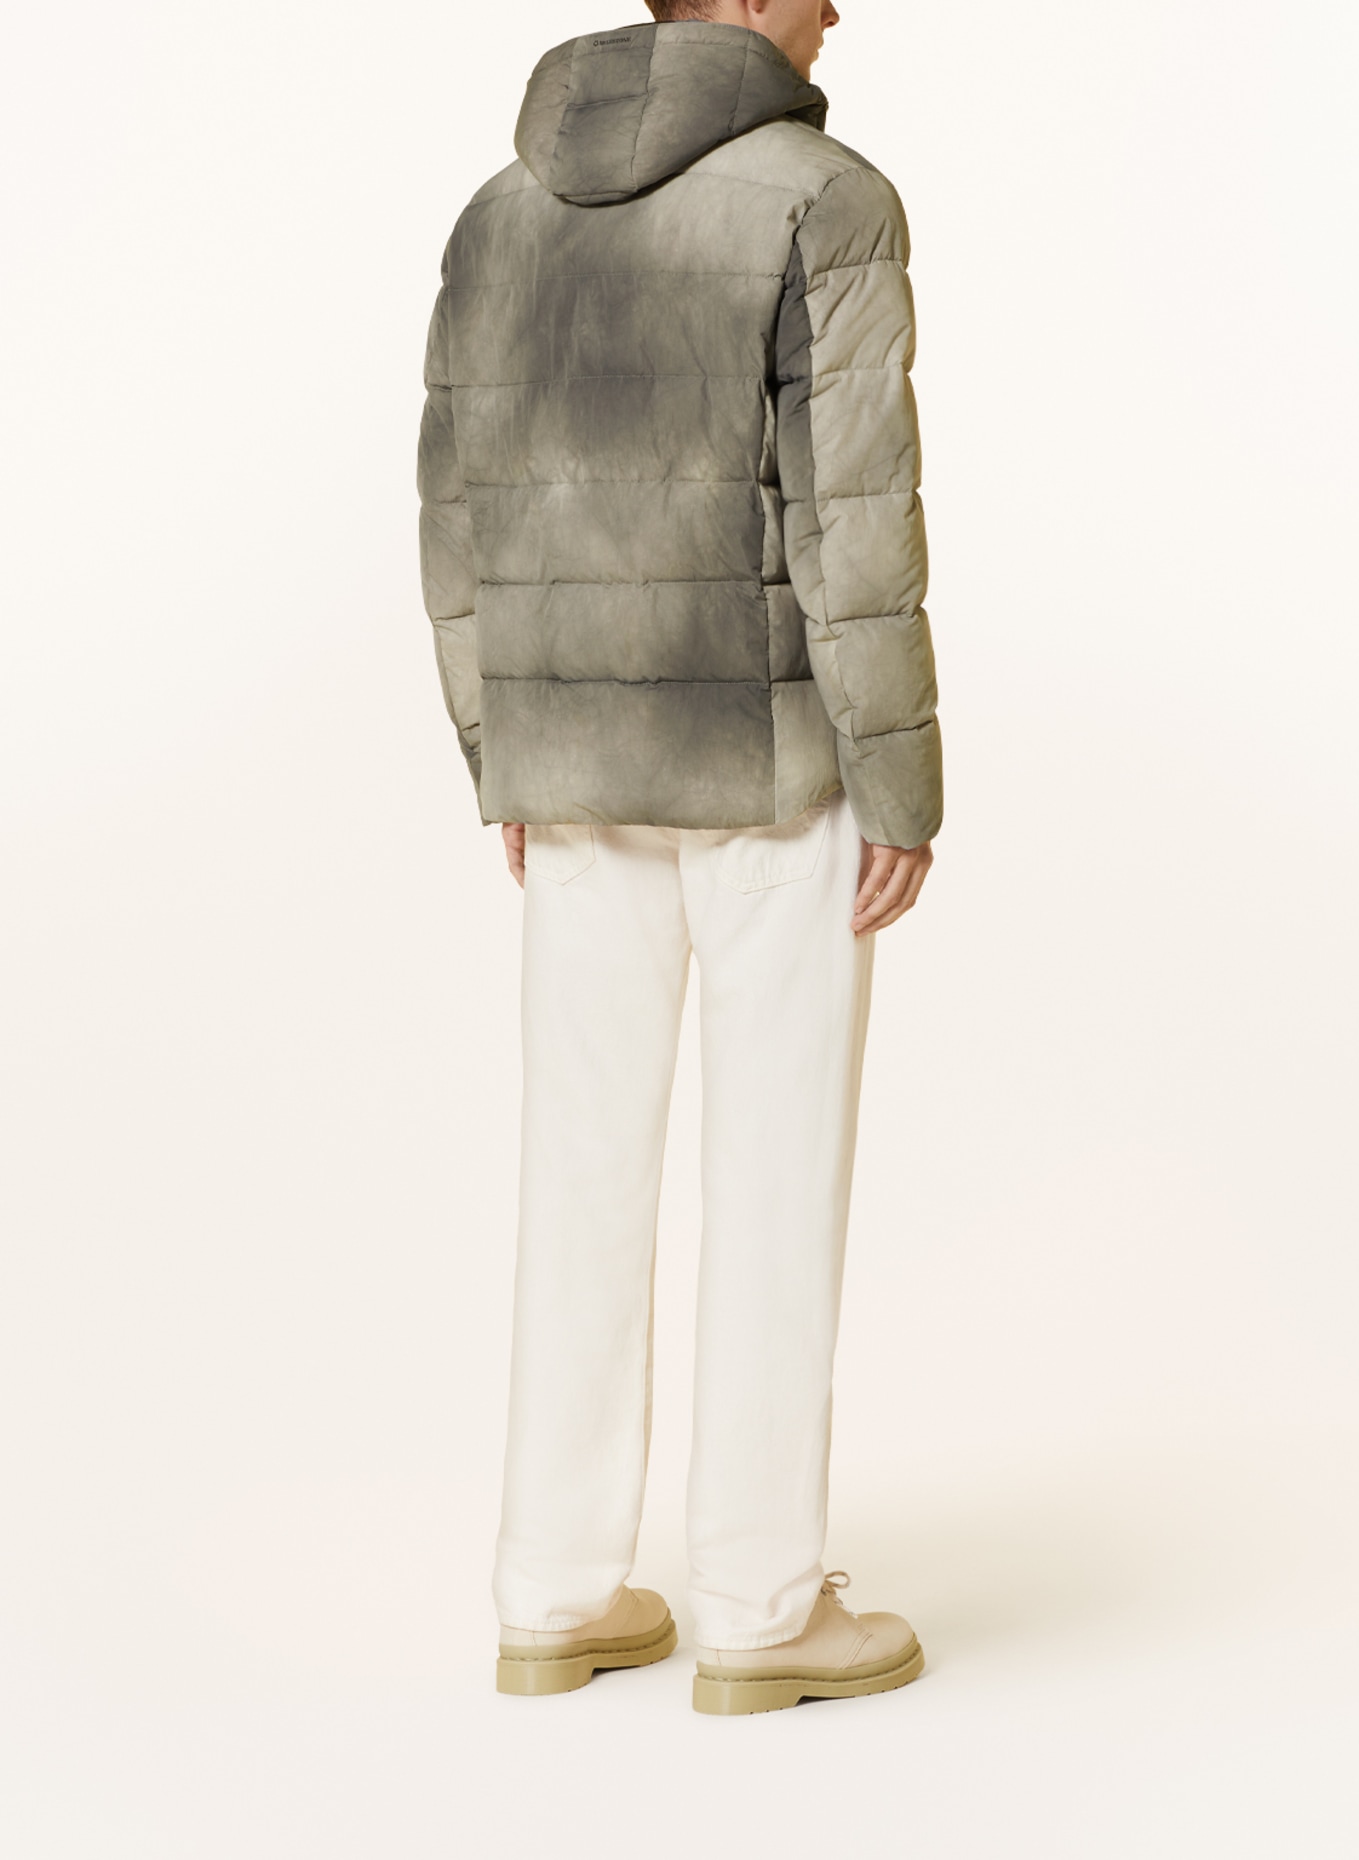 MILESTONE Jacke MS-KYLE mit abnehmbarer Kapuze, Farbe: DUNKELGRAU (Bild 3)